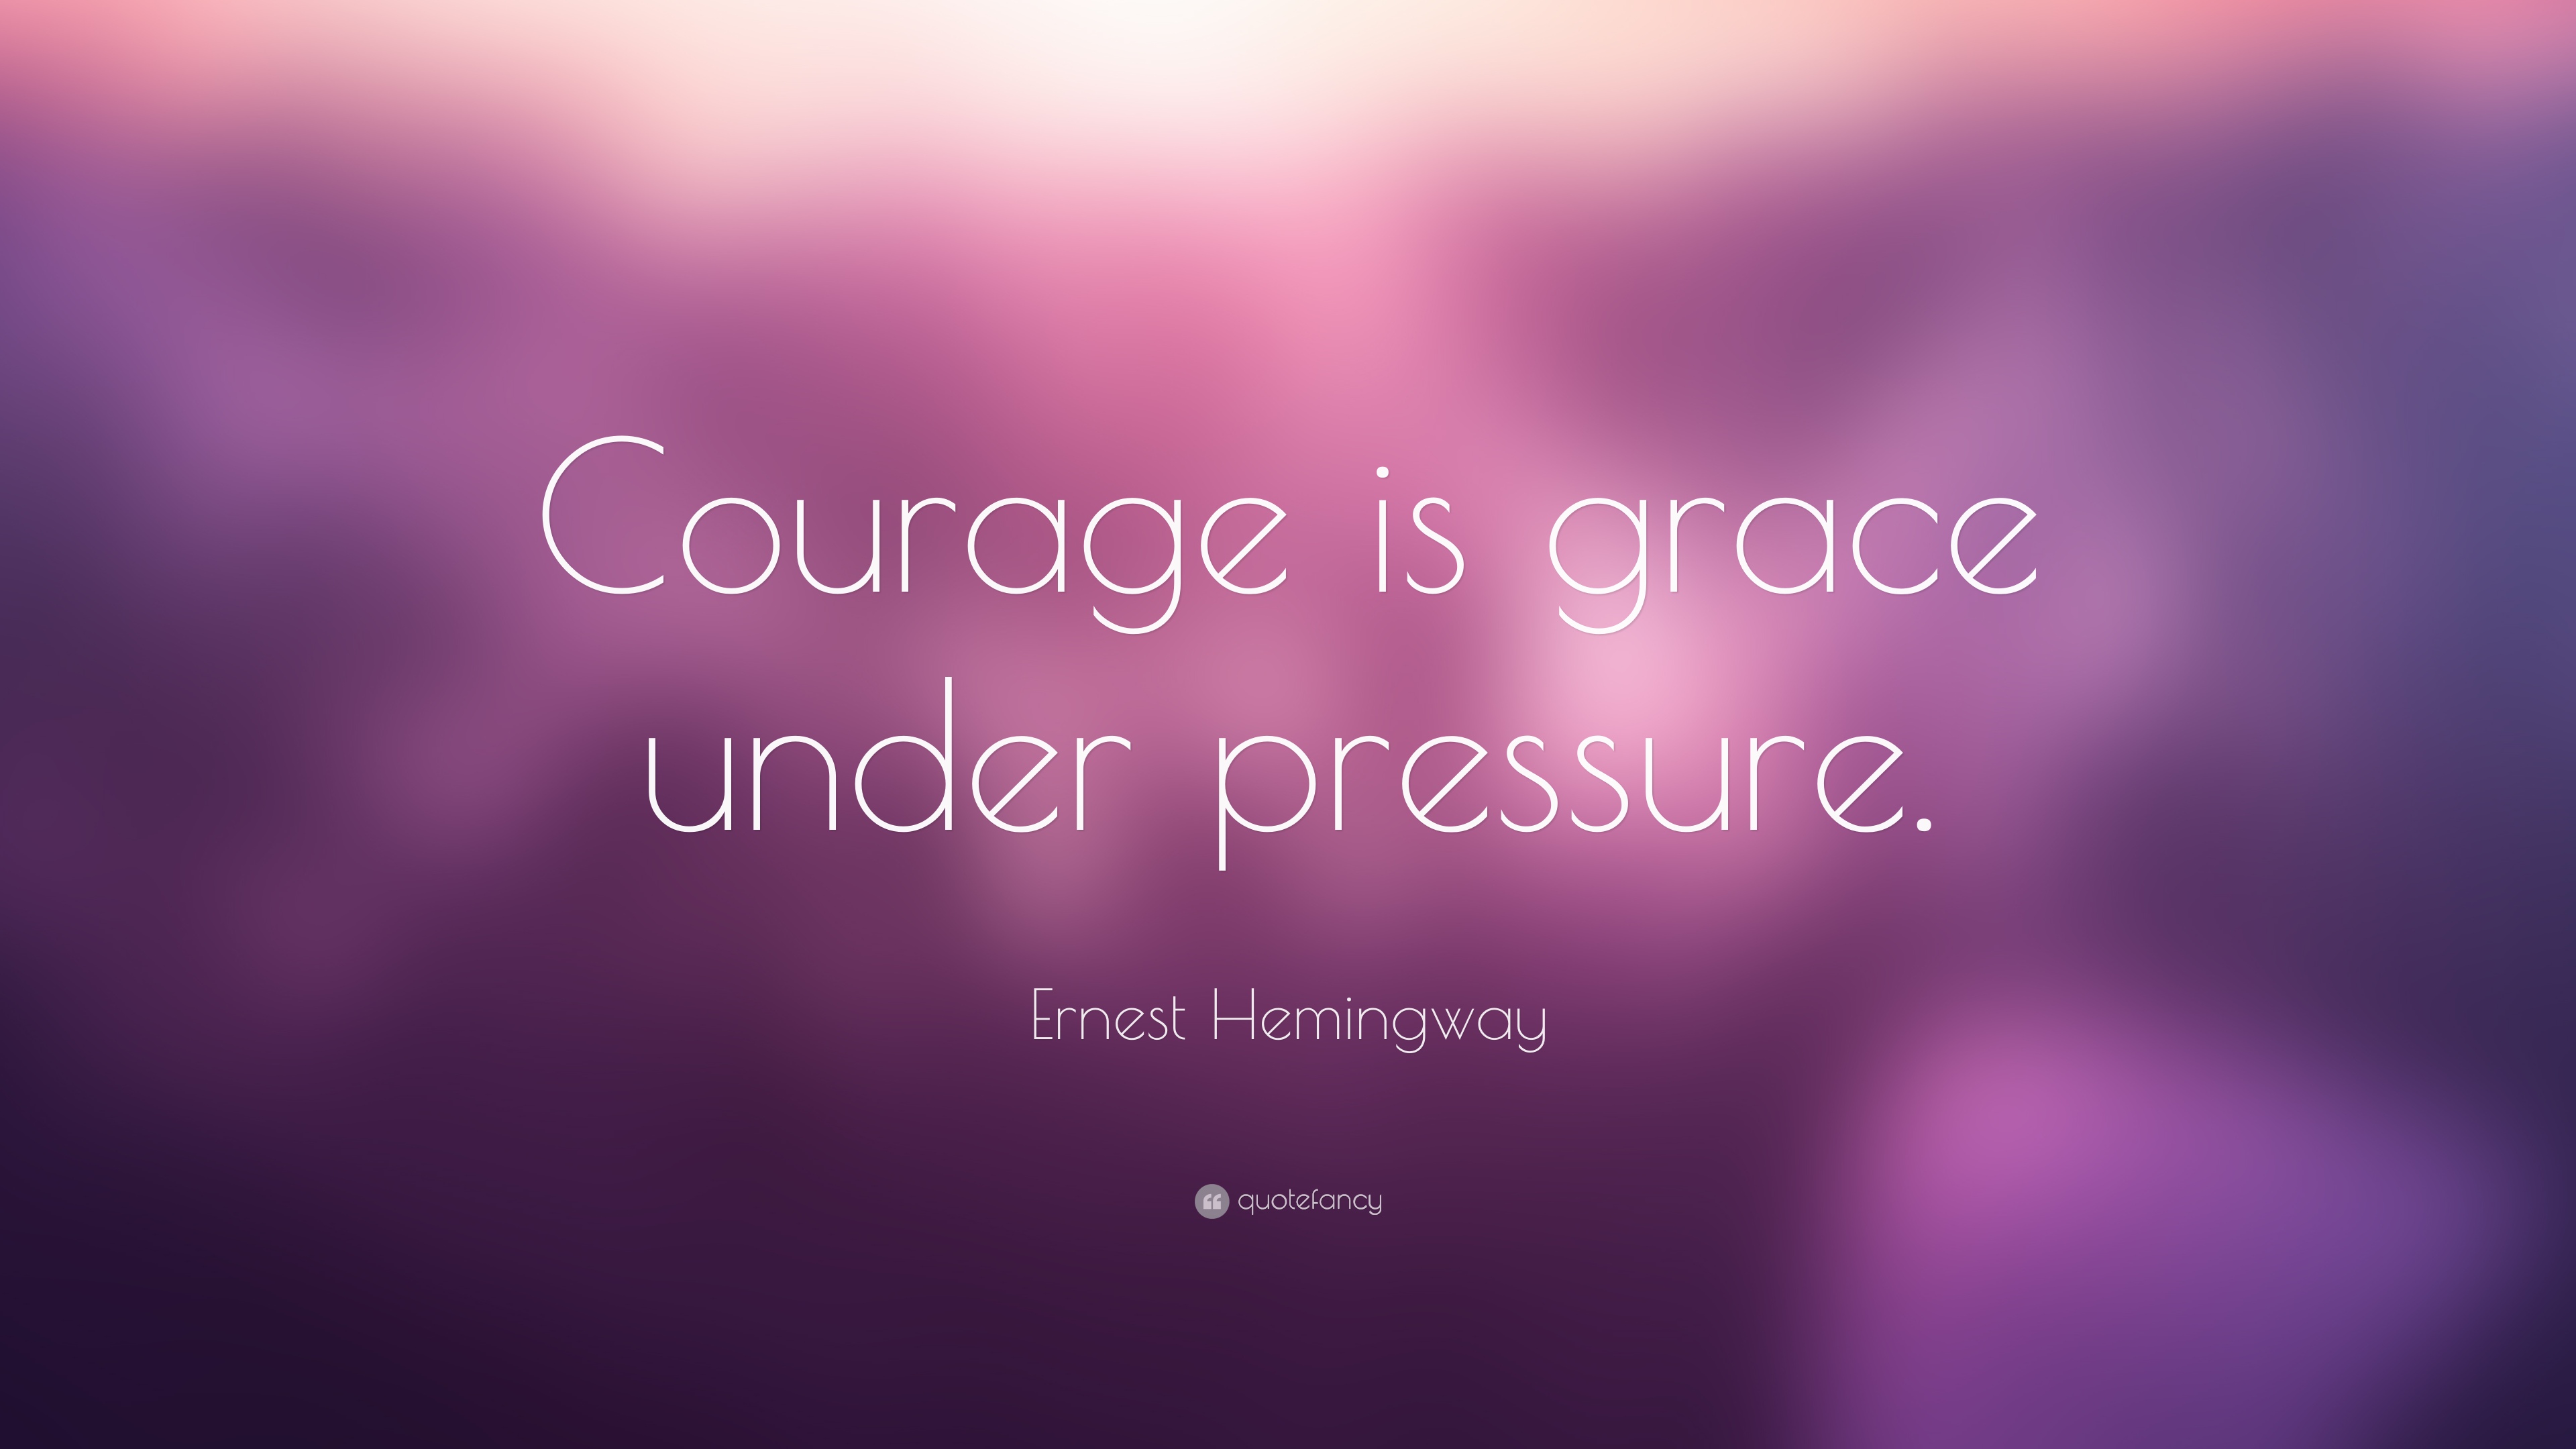 Ernest Hemingway Quote Courage is grace under pressure. 9